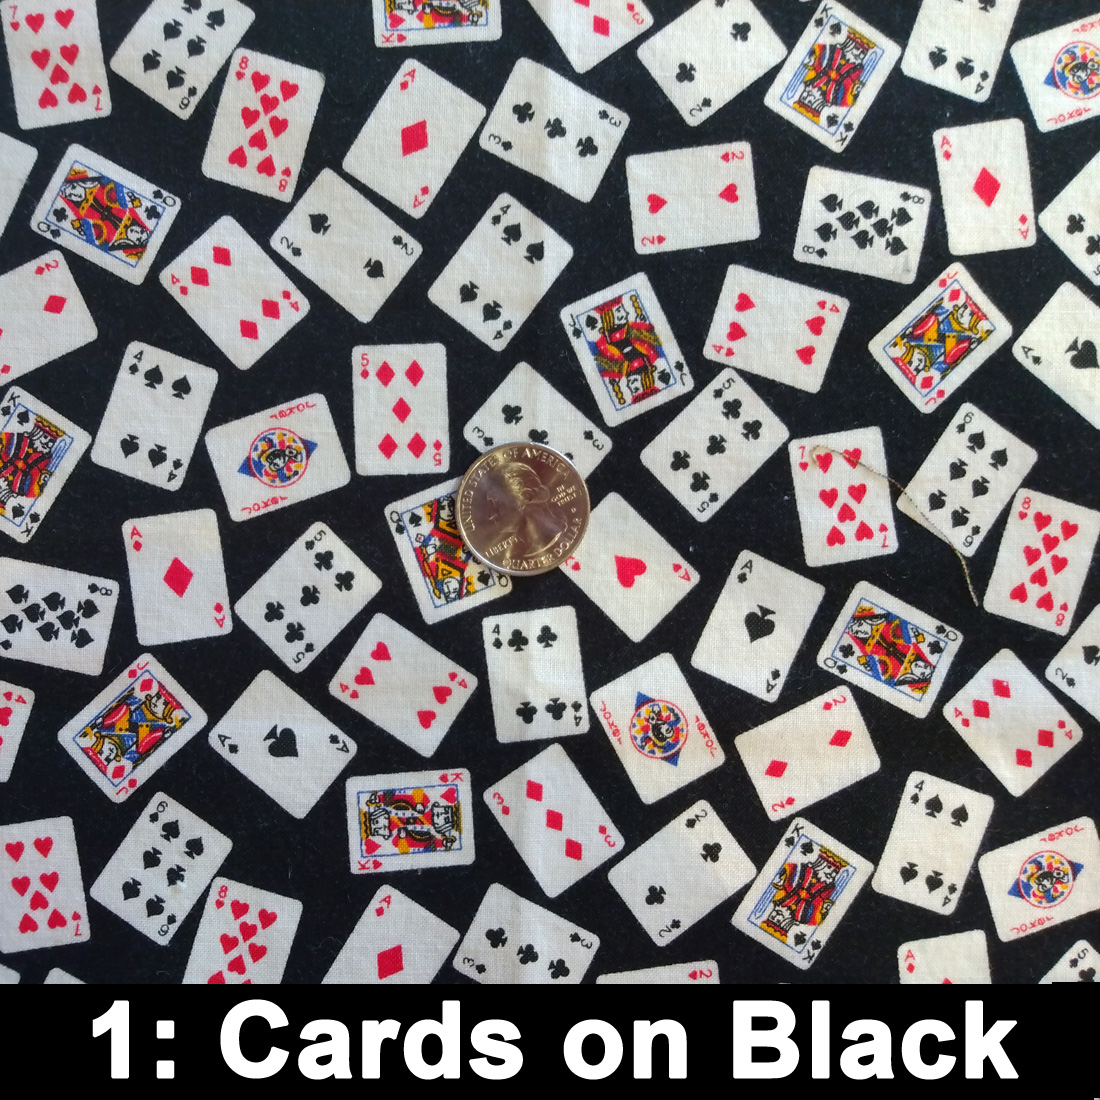 Cards on Black